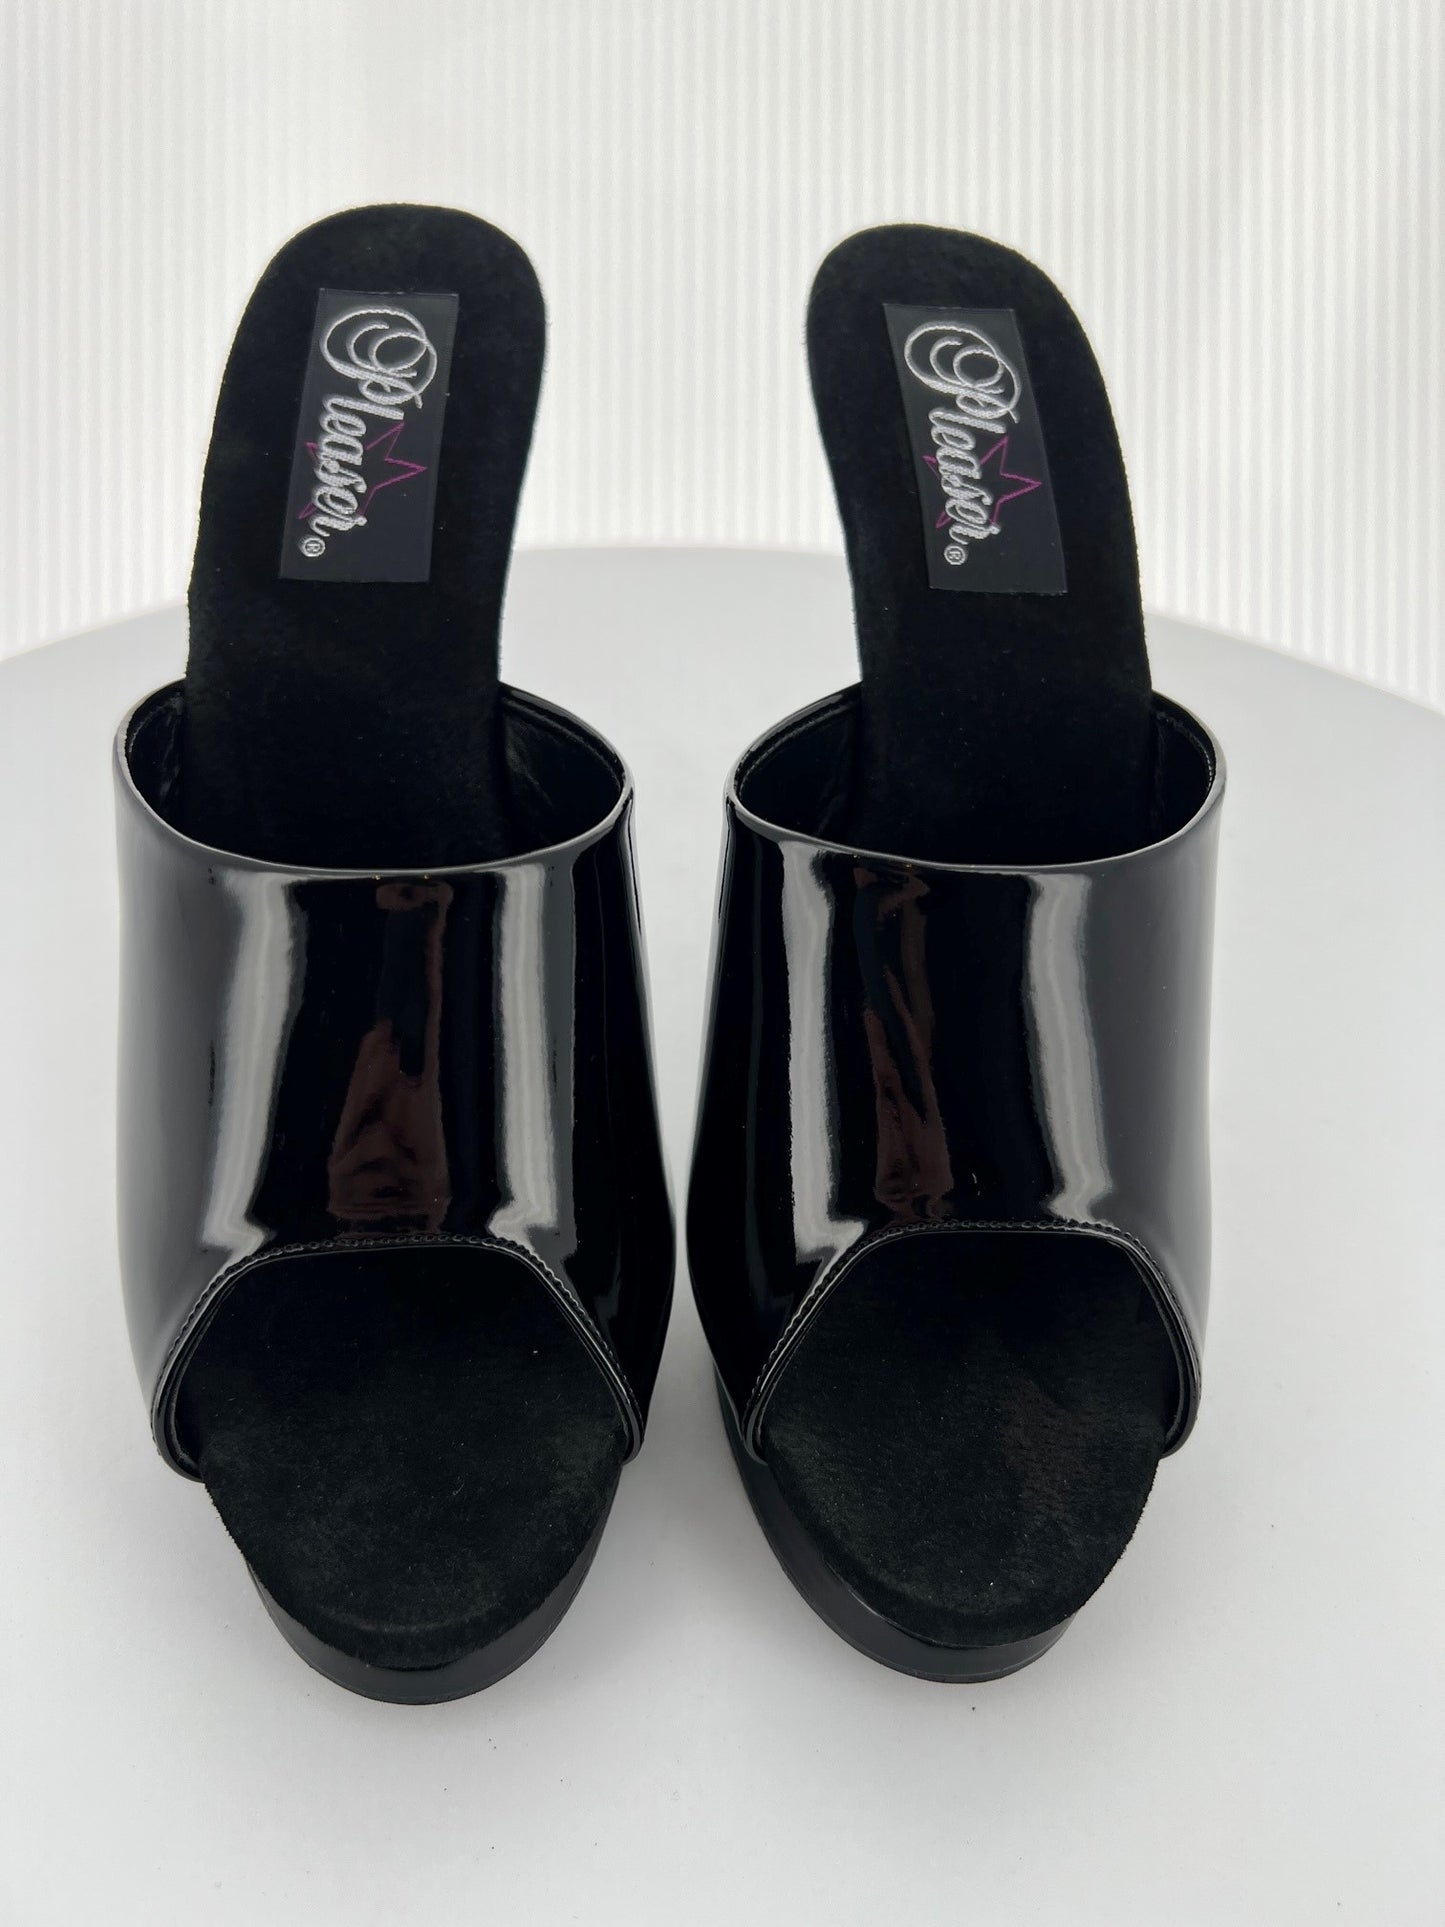 STARLET-501 Pleaser Blk/Blk Patent High Heel Alternative Footwear Discontinued Sale Stock